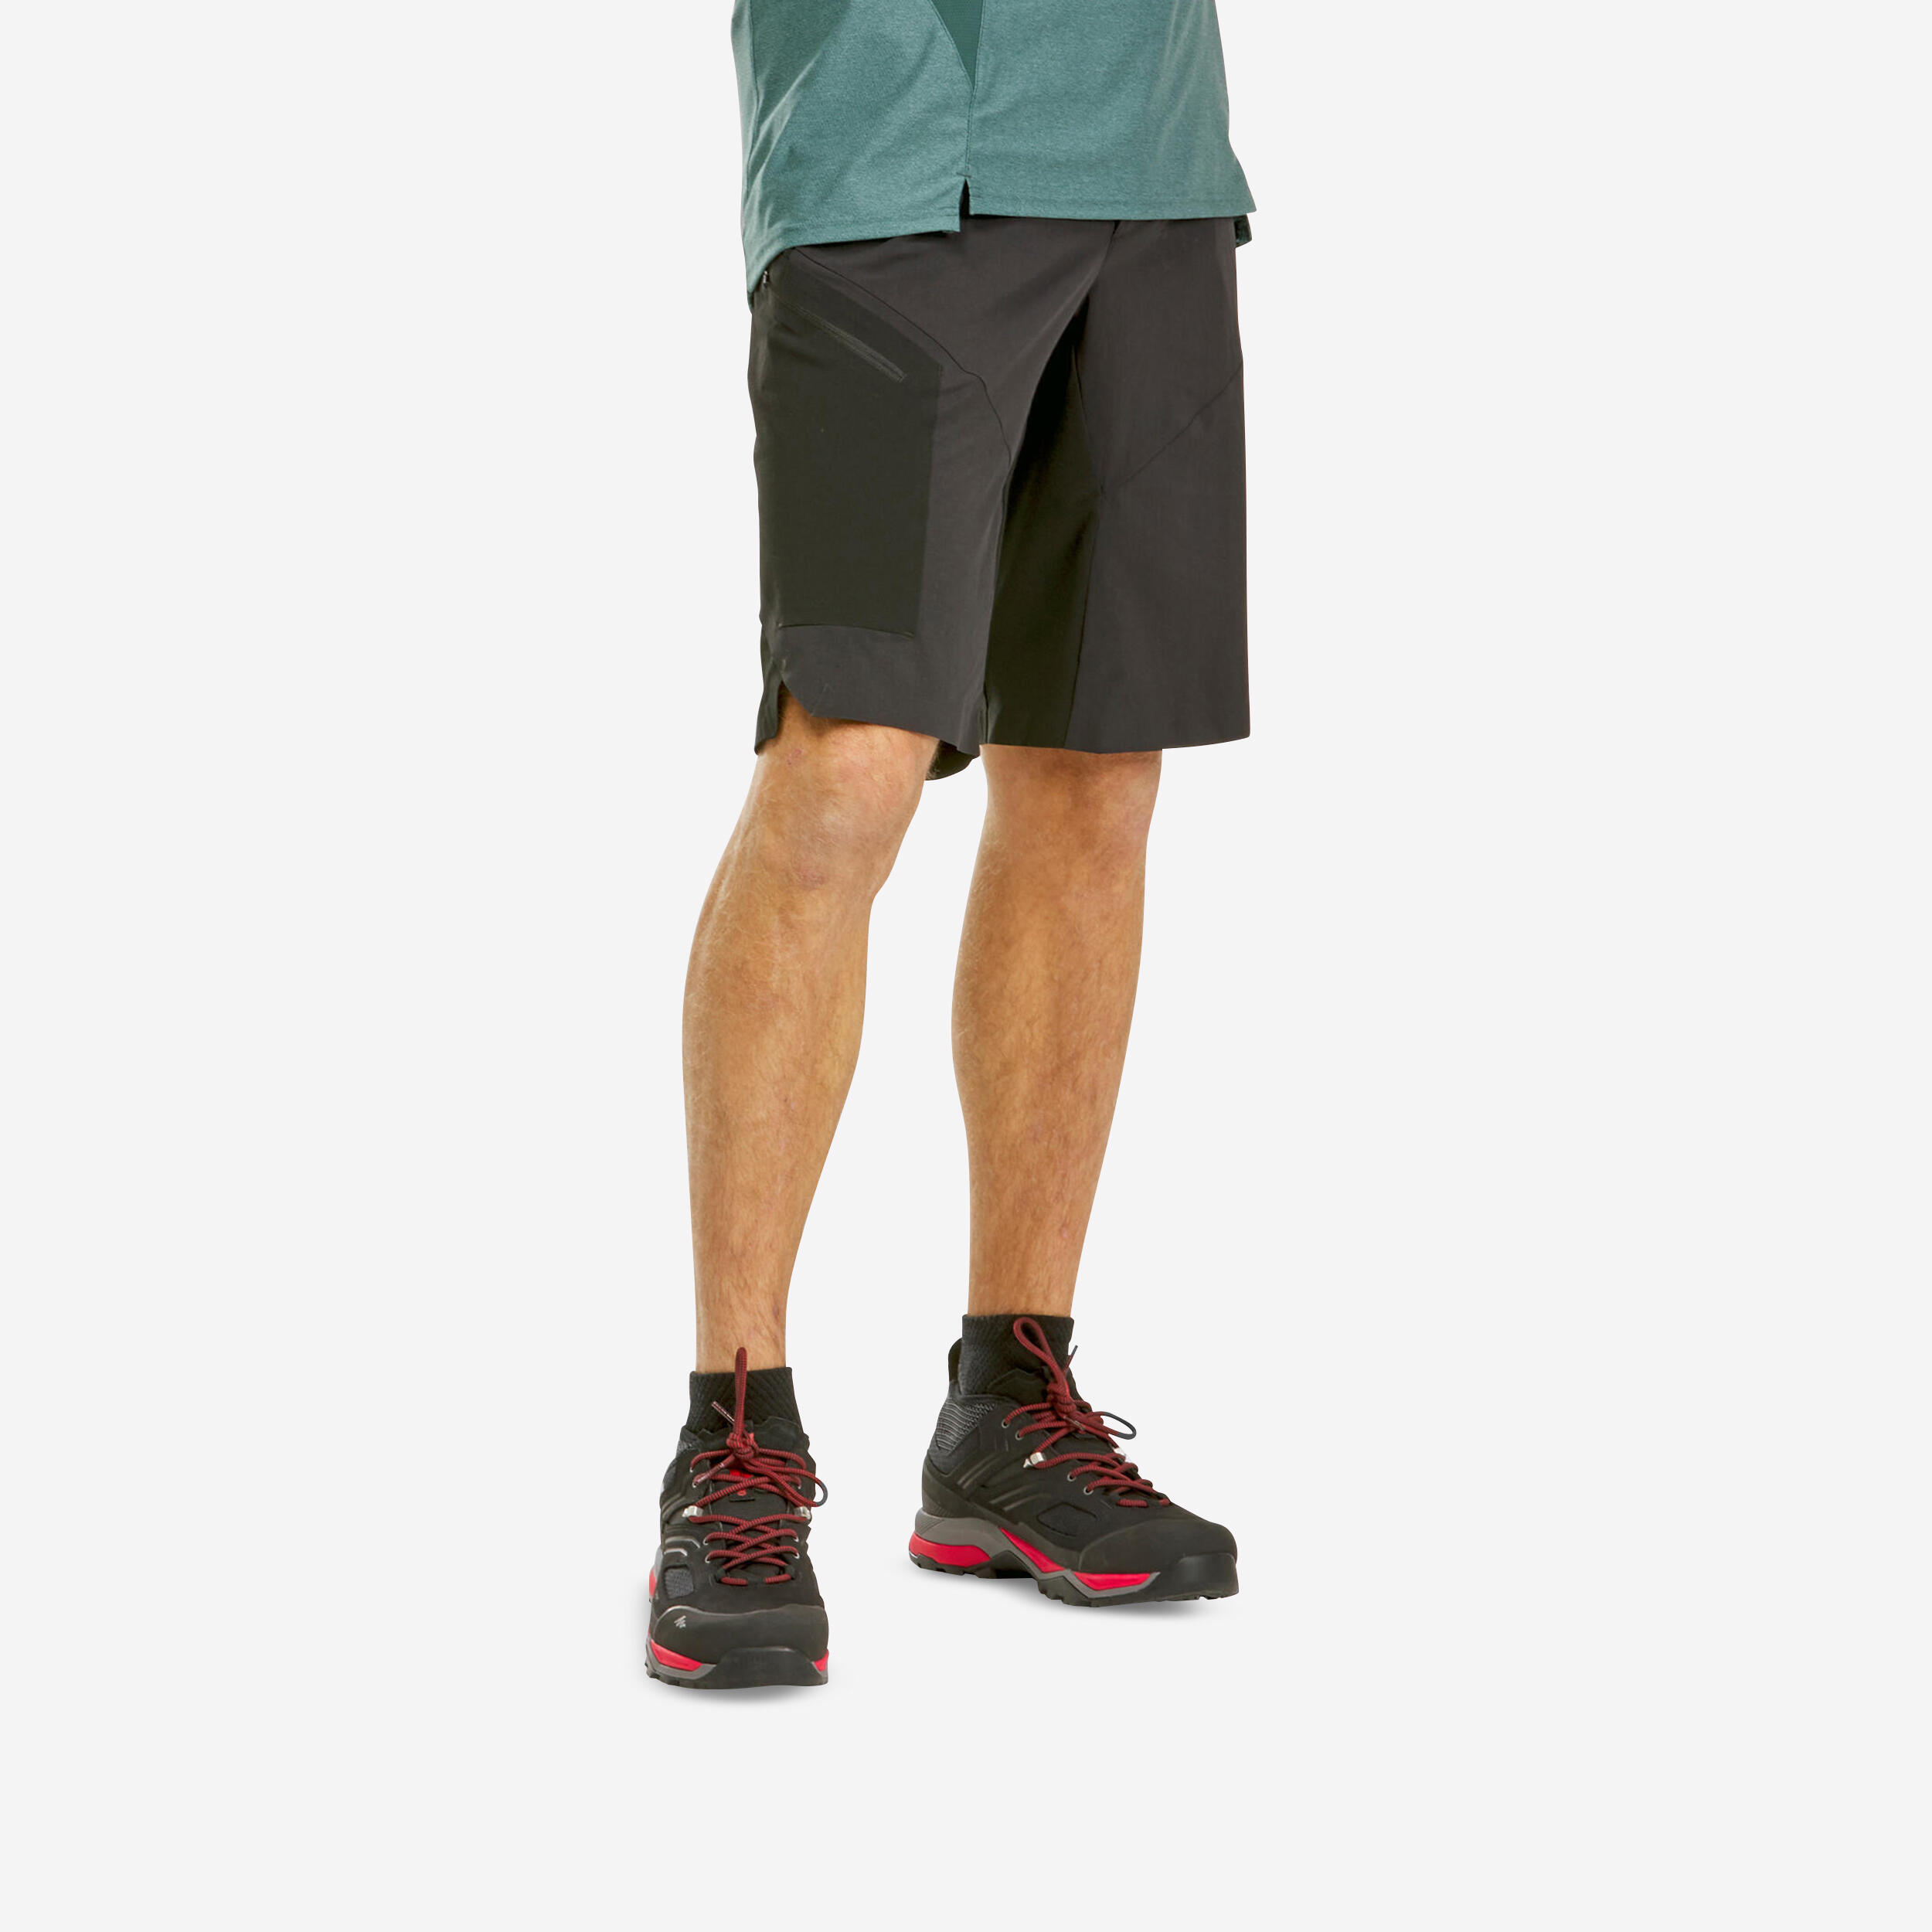 Image of Men’s Hiking Shorts - MH 500 Black